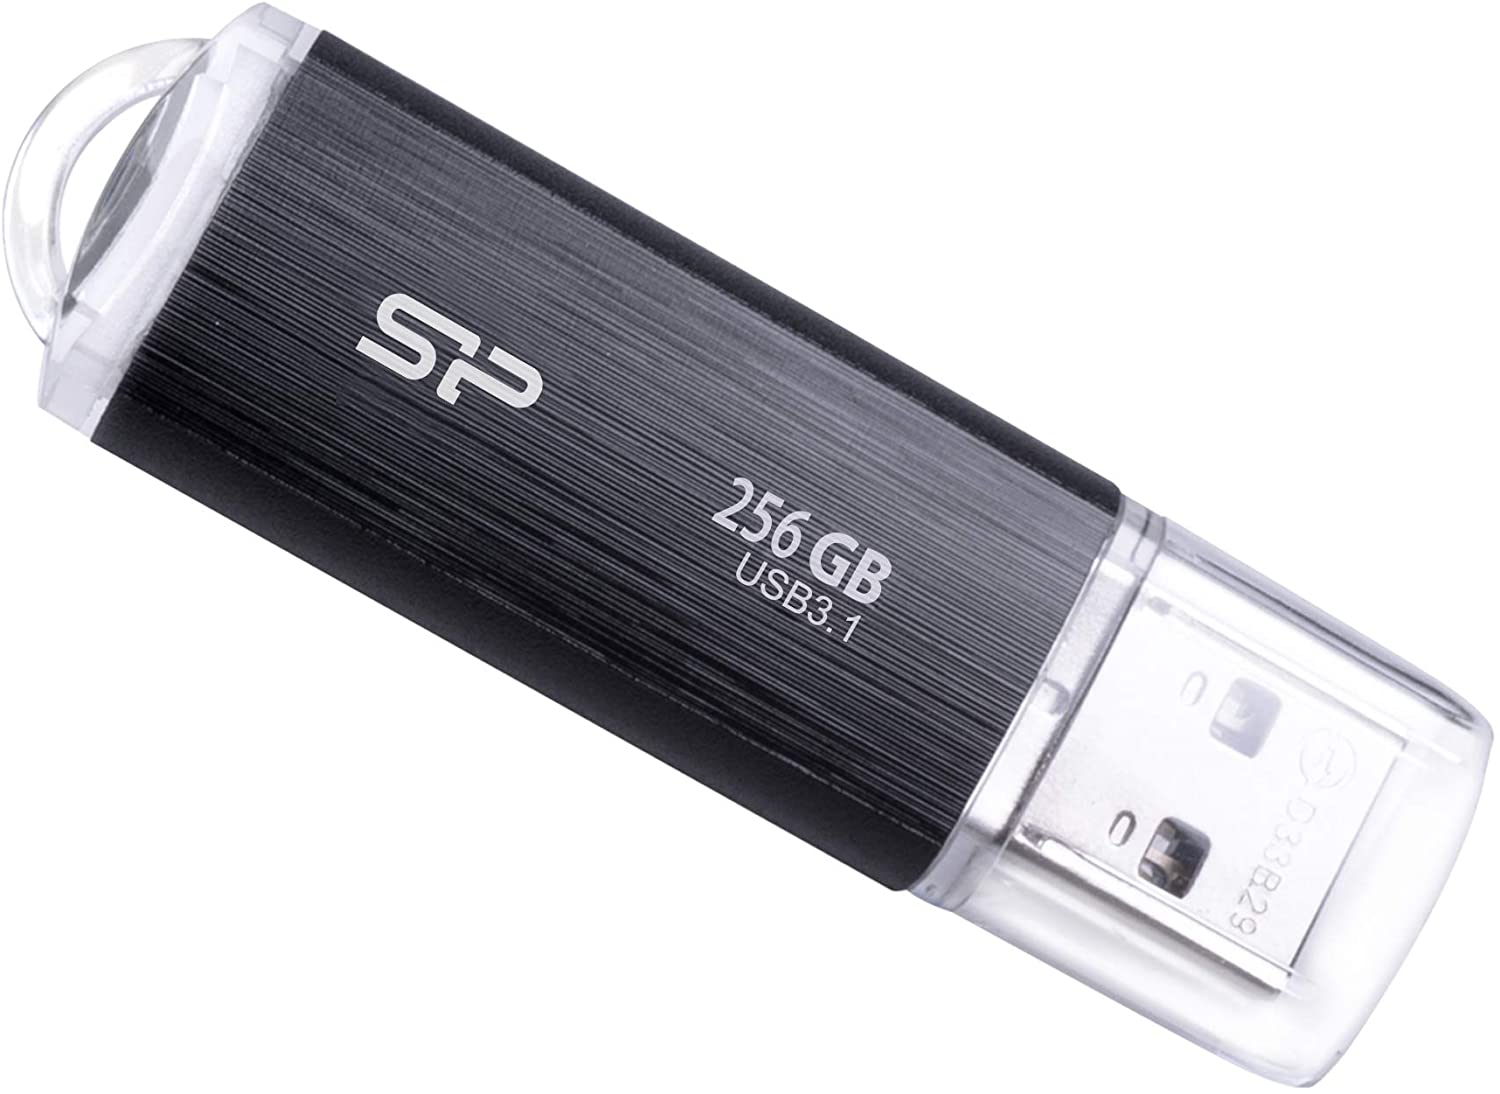 Silicon Power 256GB USB 3.0/3.1 Gen1 USB Flash Drive